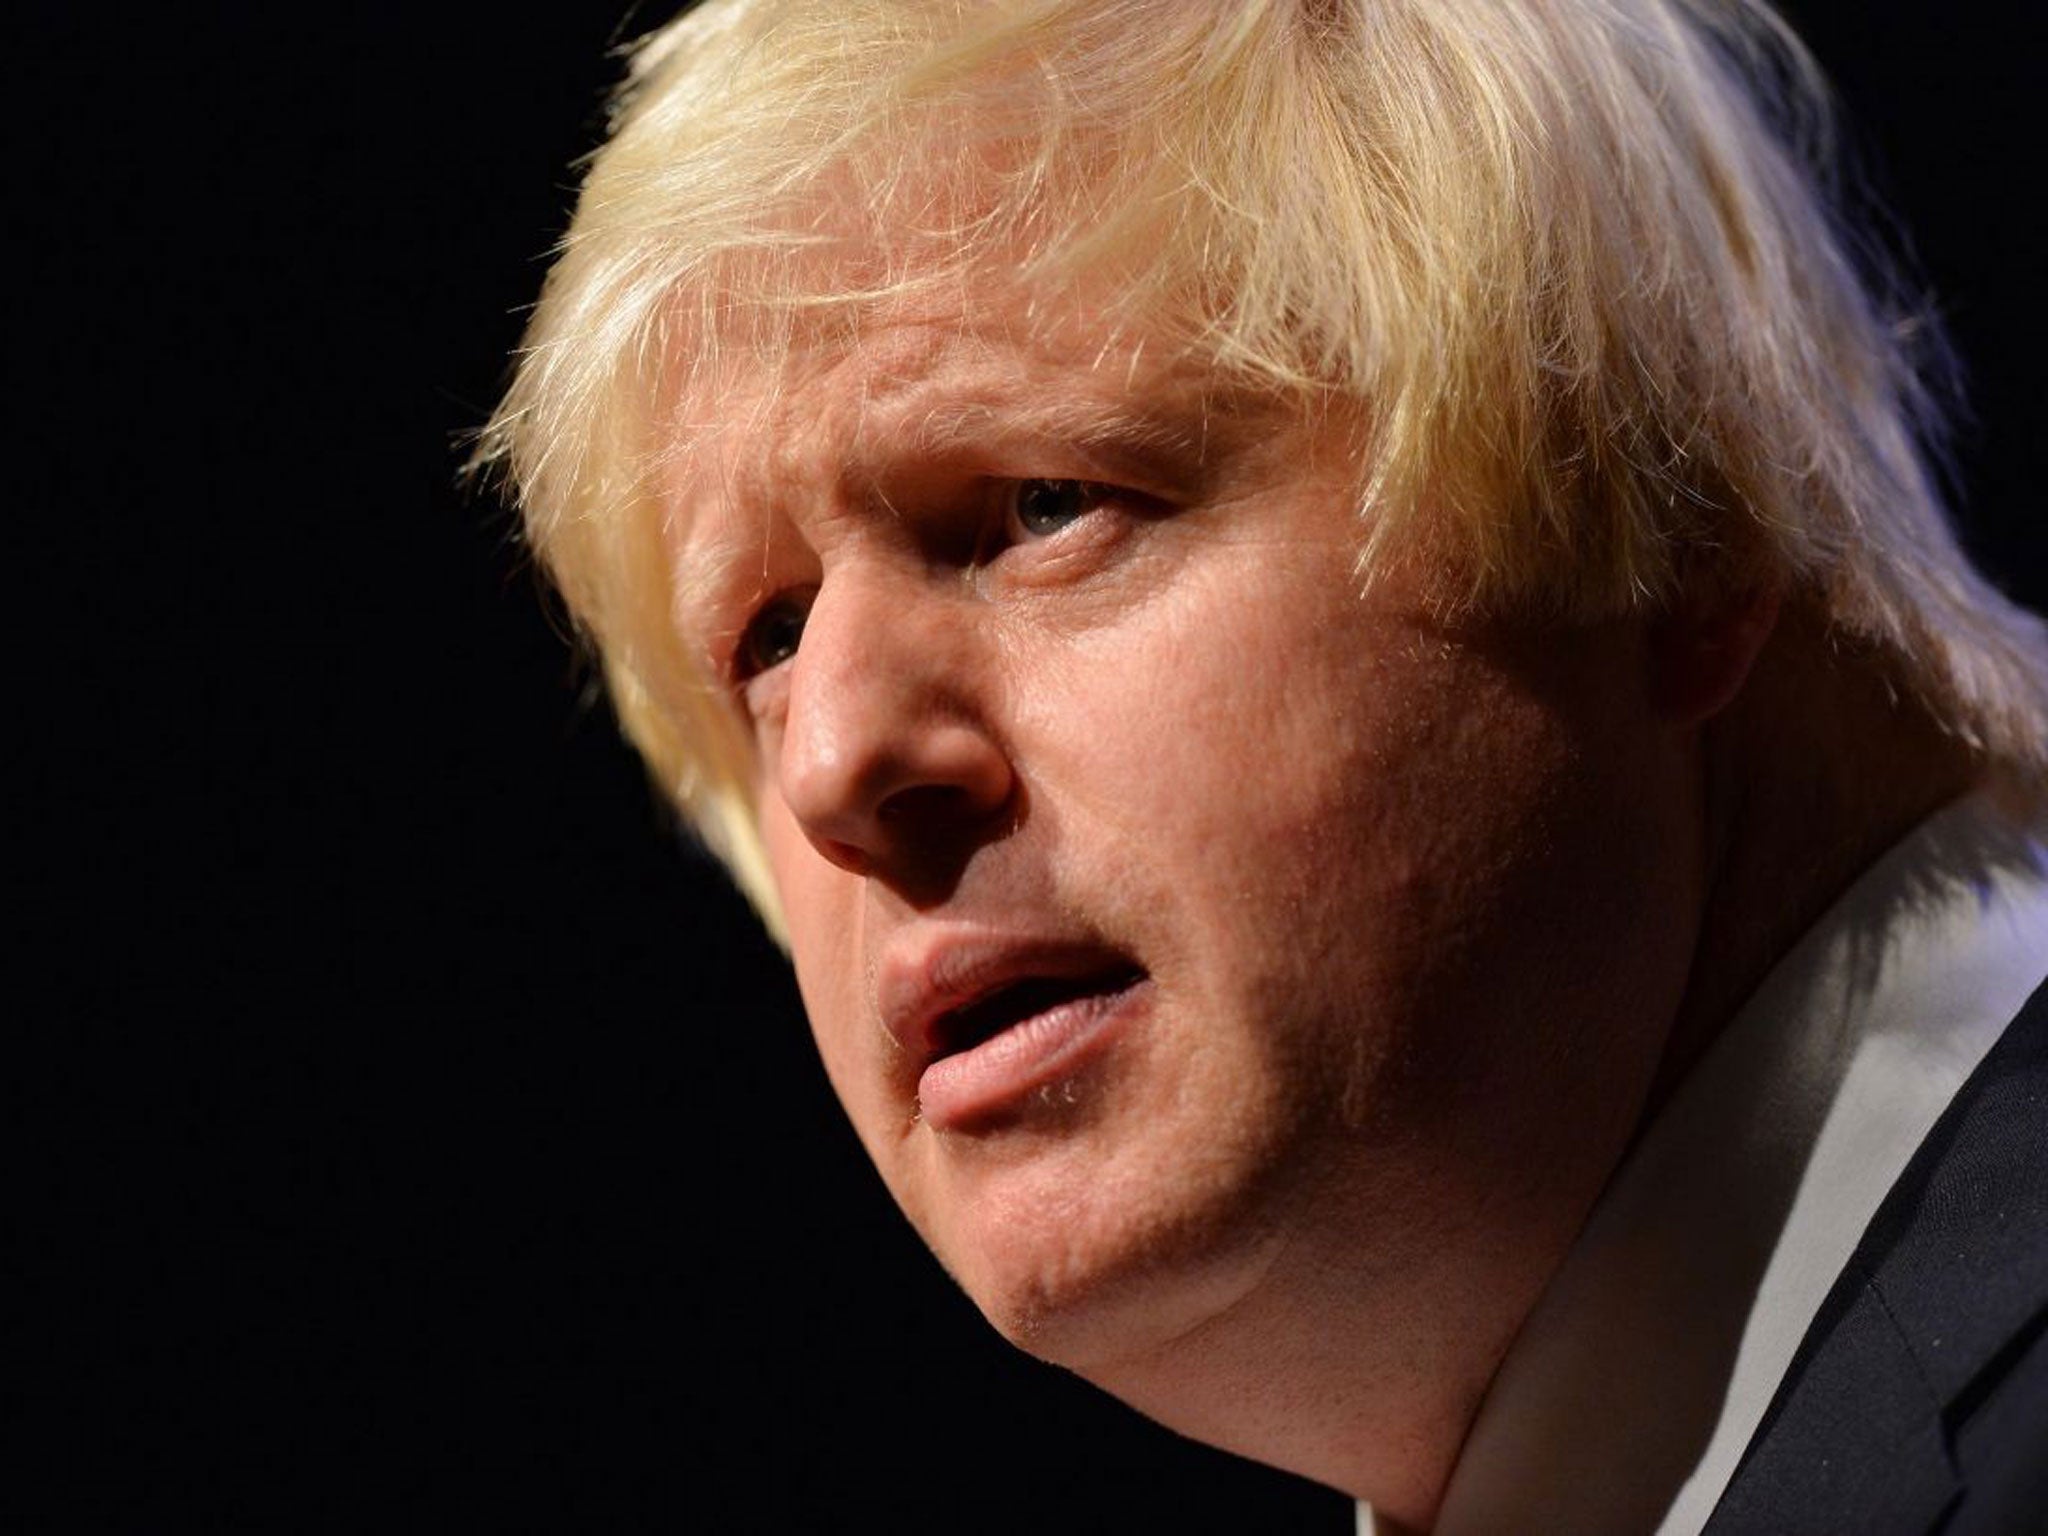 London Mayor Boris Johnson says people should stop 'bashing' the super-rich